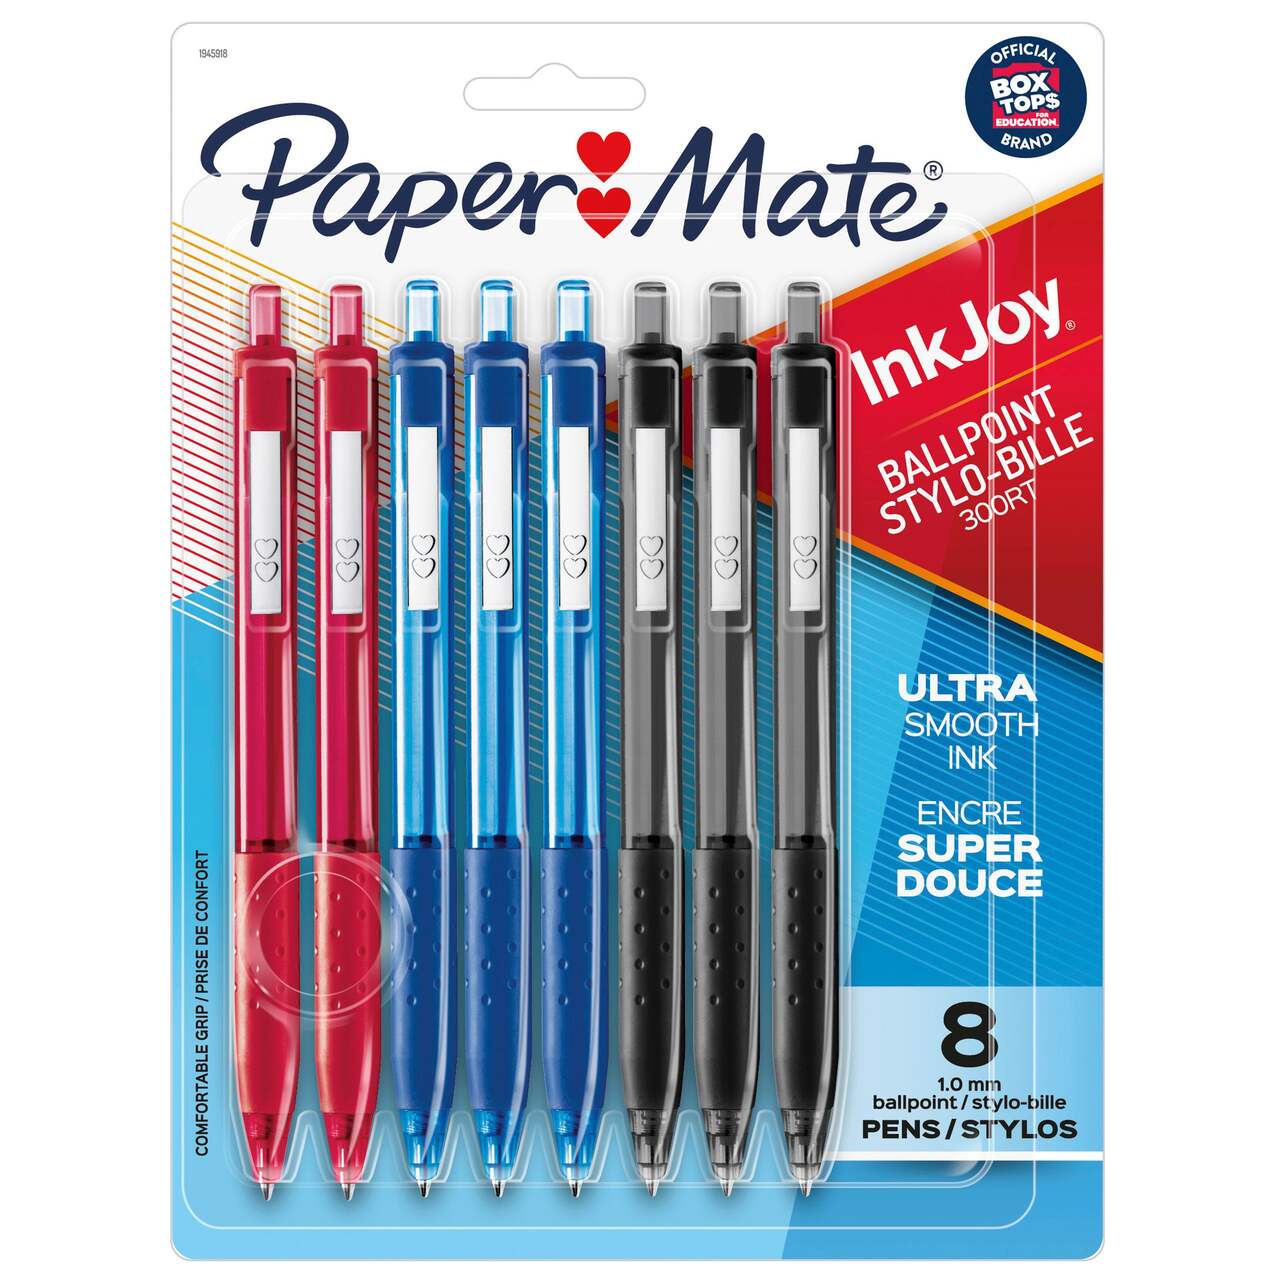 PaperMate® InkJoy 100 ST 1.0mm stylo à bille , 12/ Boîte